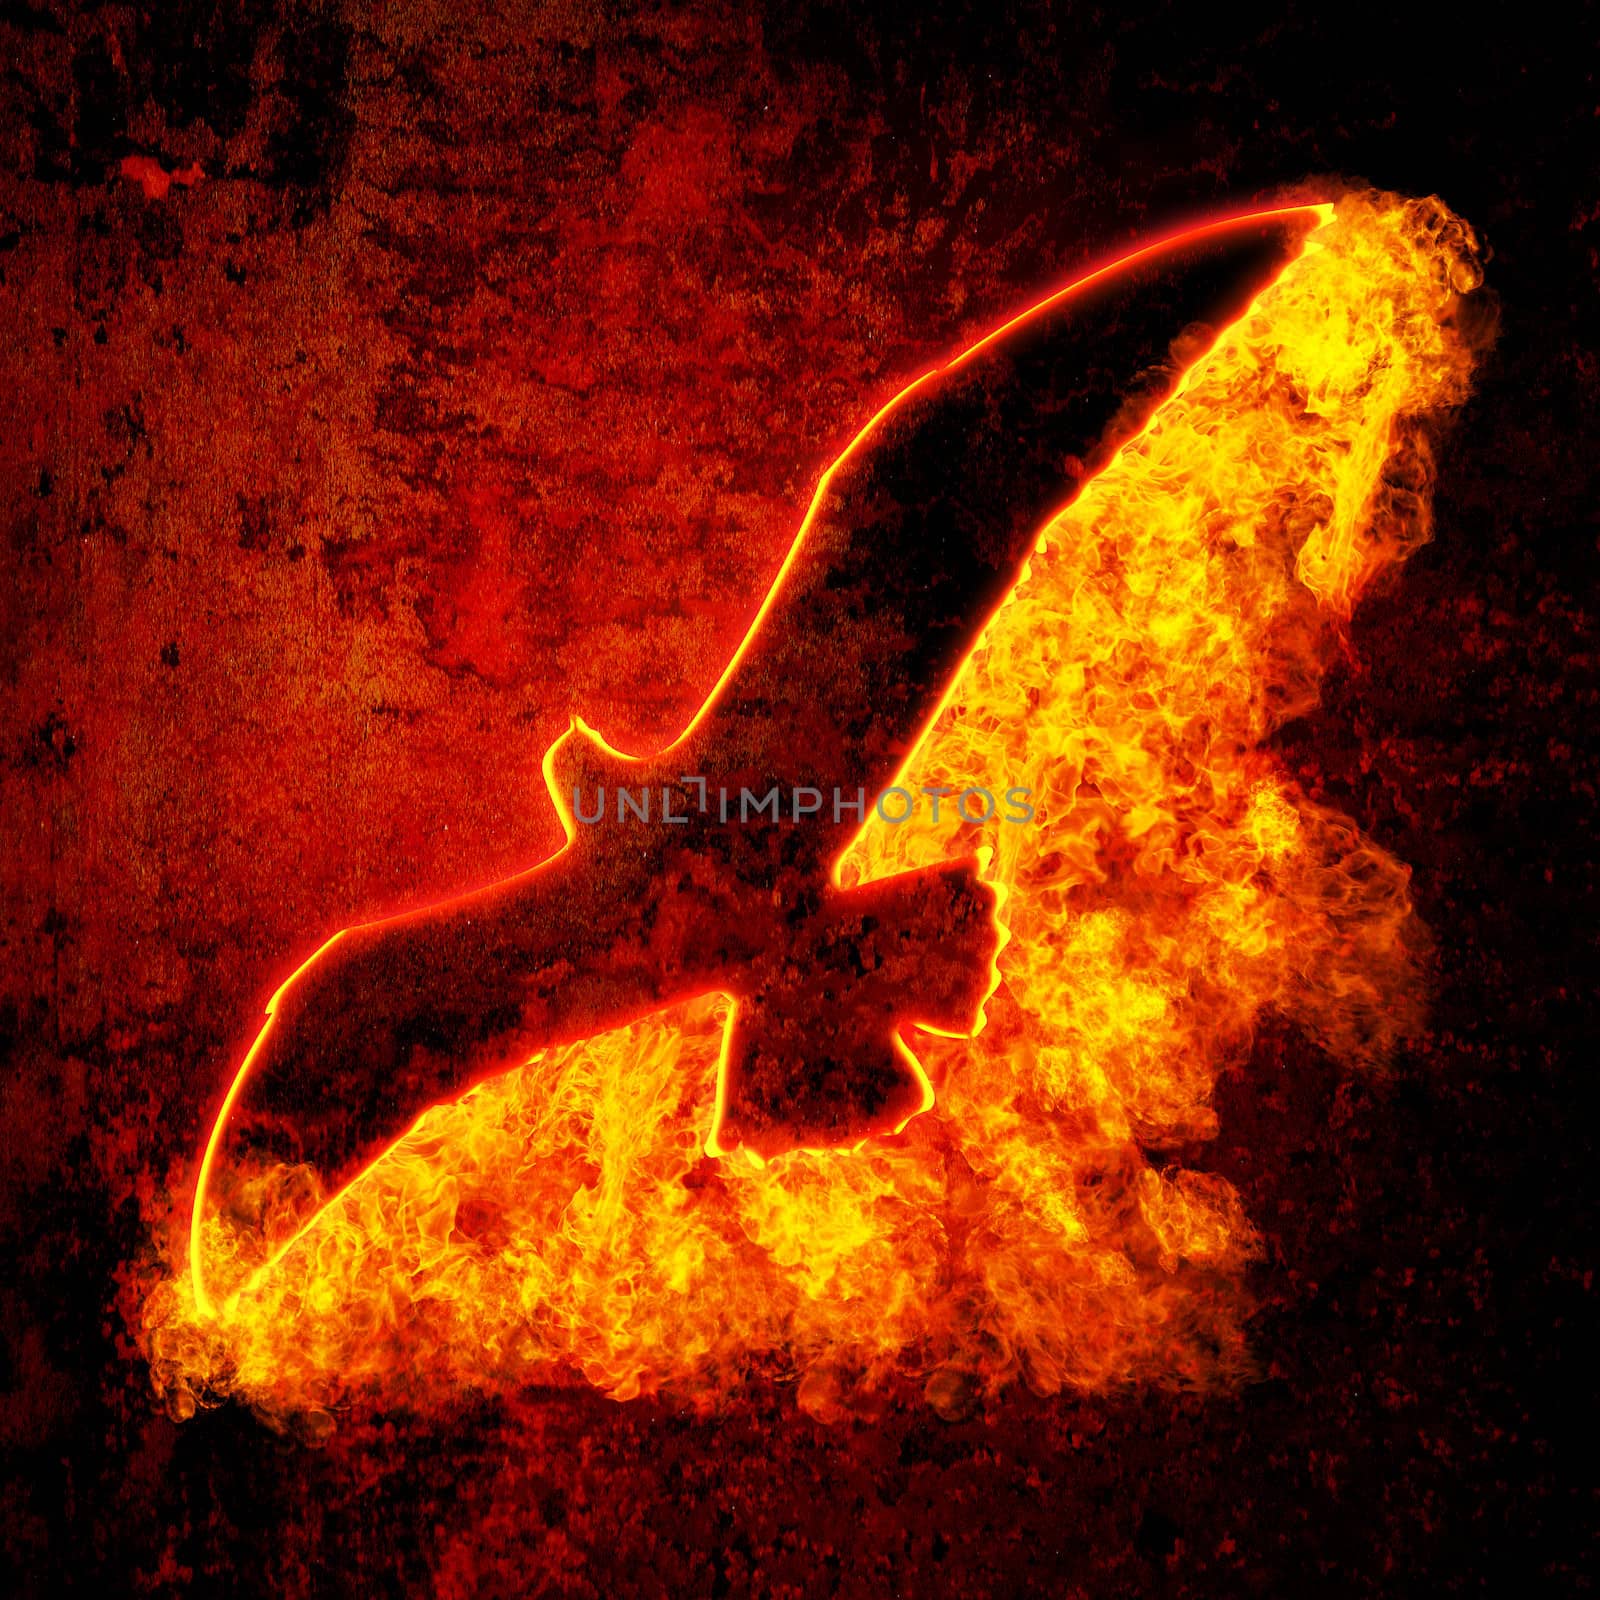 Burning bird silhouette on grunge background